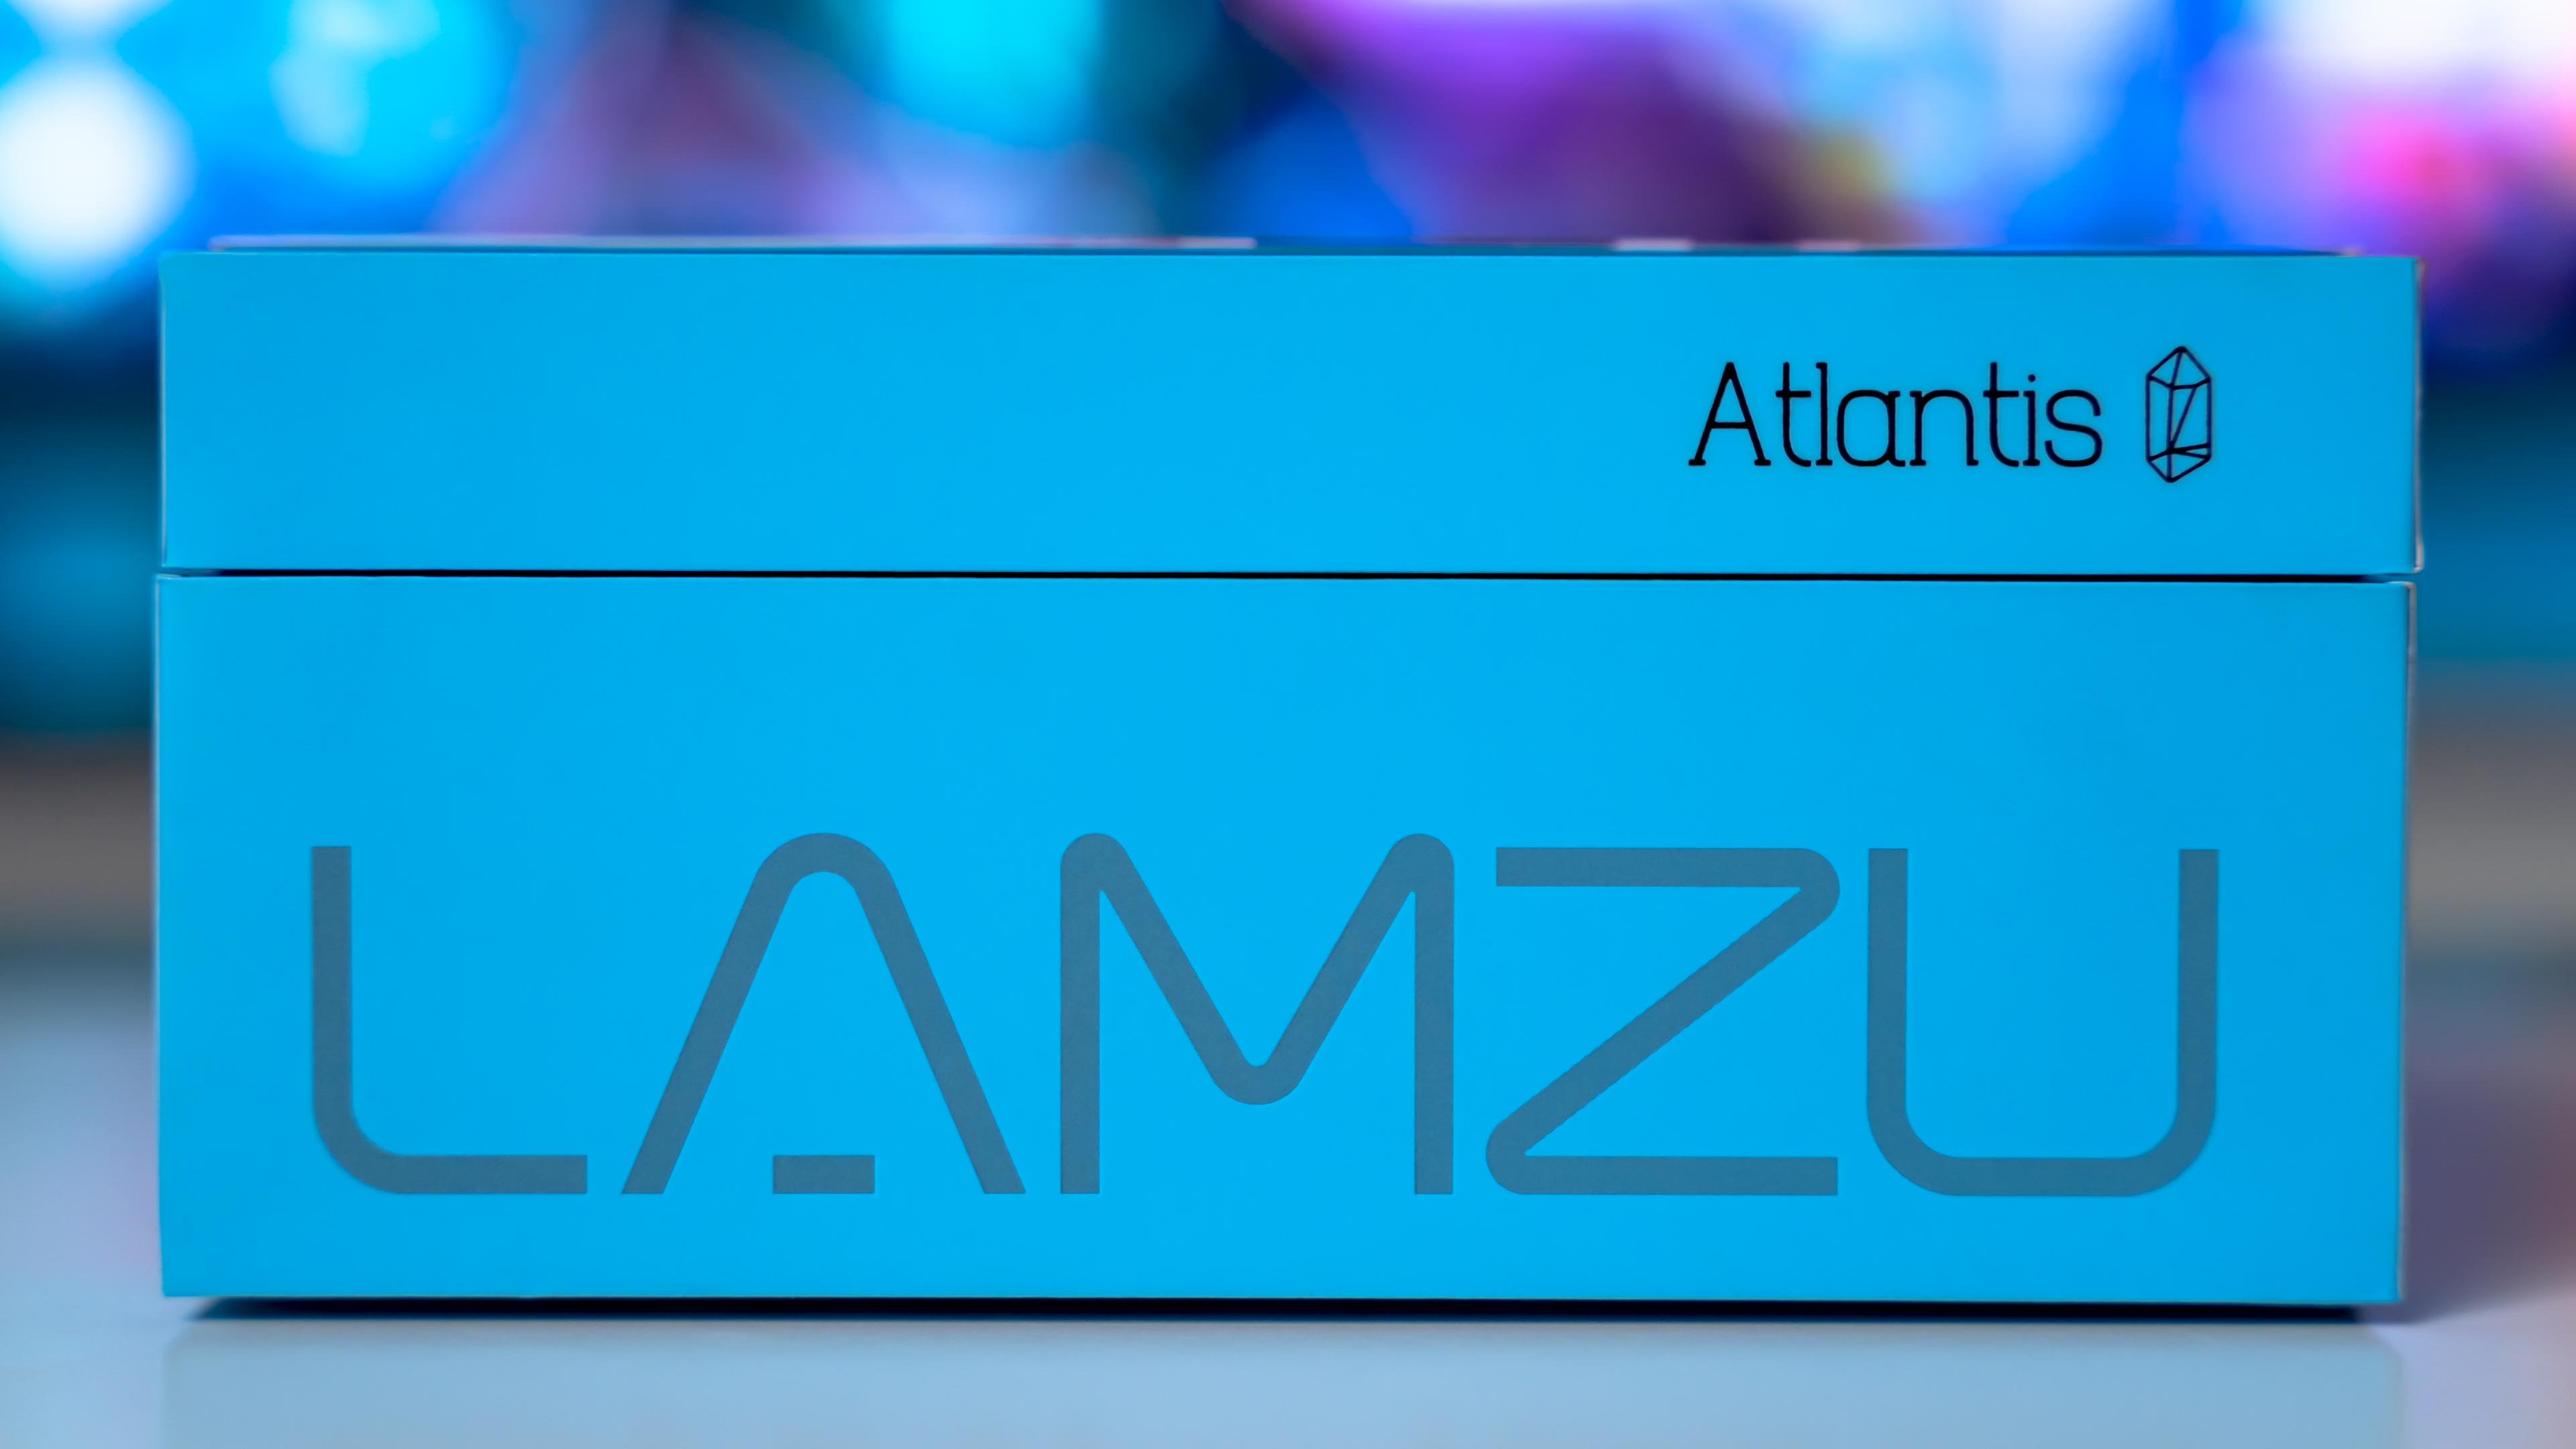 LAMZU Atlantis Wireless Superlight Box (5)